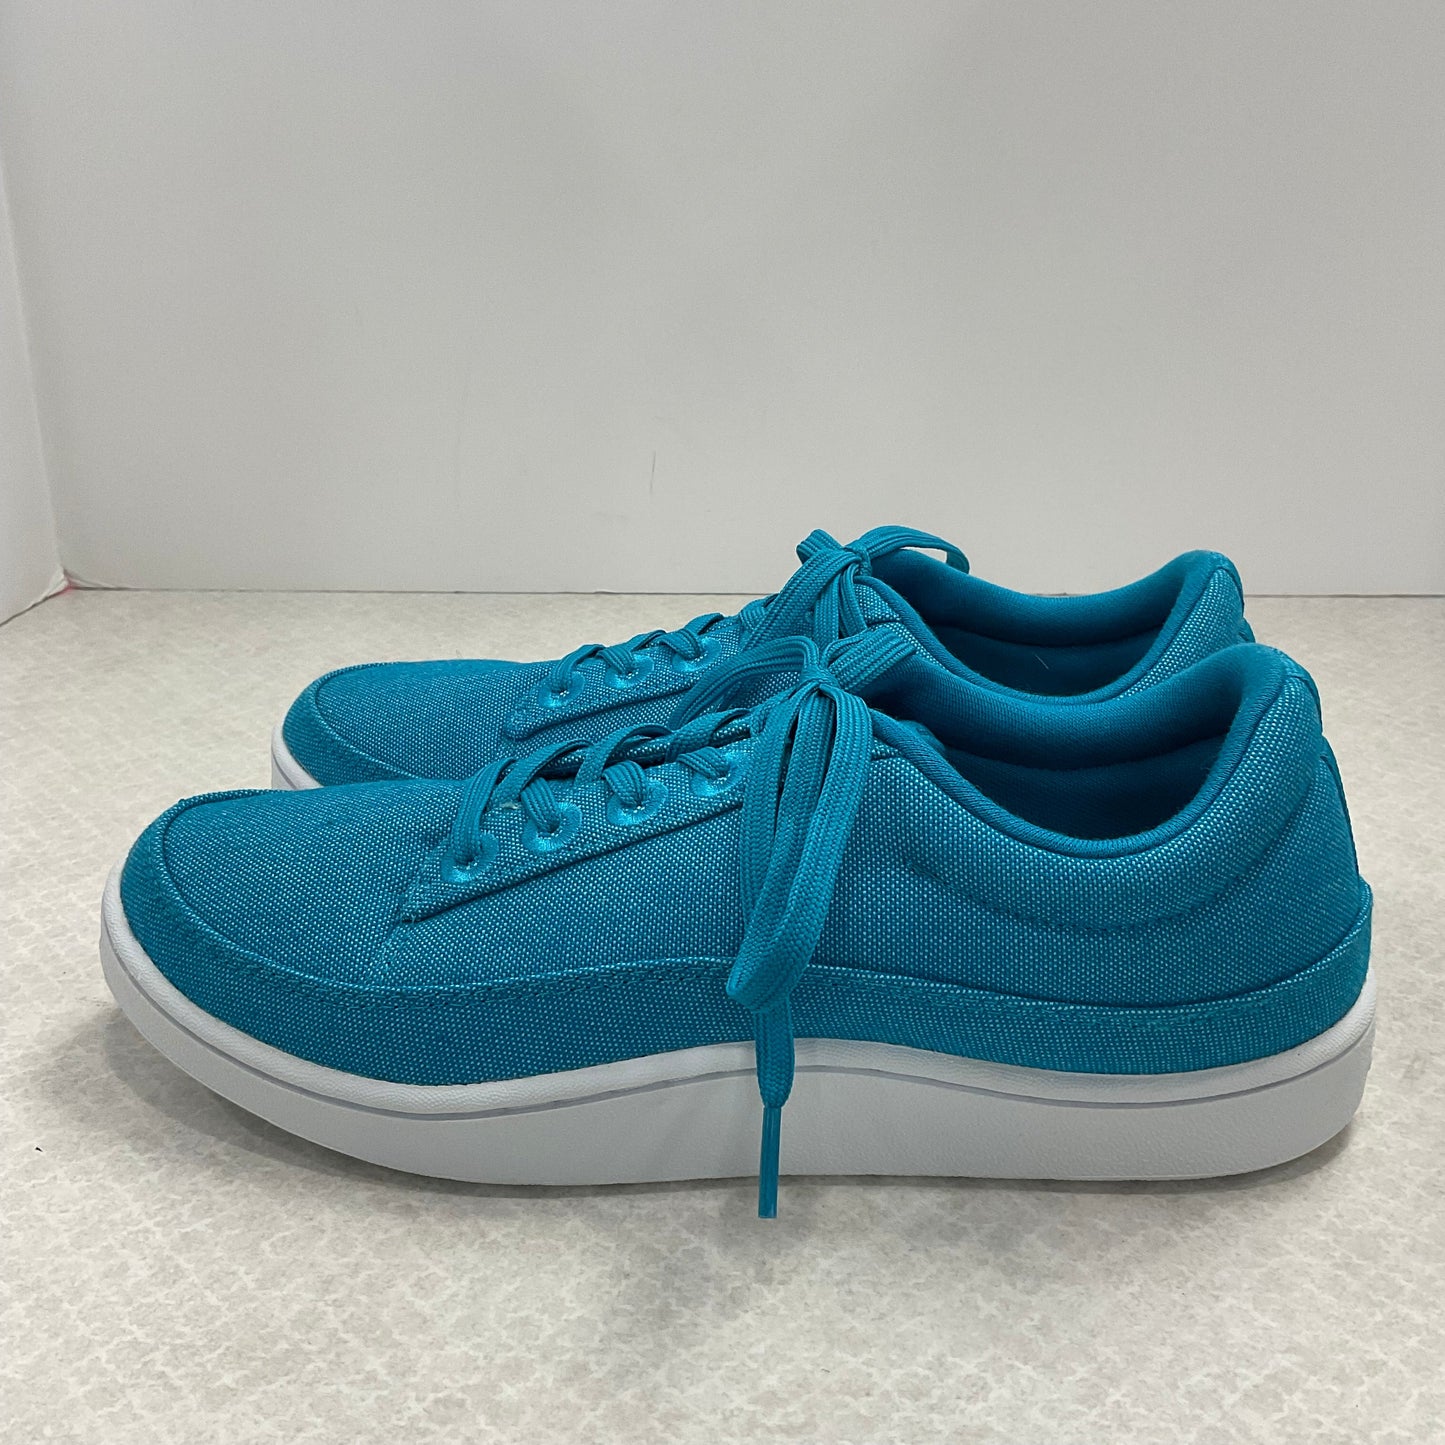 Blue Shoes Sneakers Allbirds, Size 9